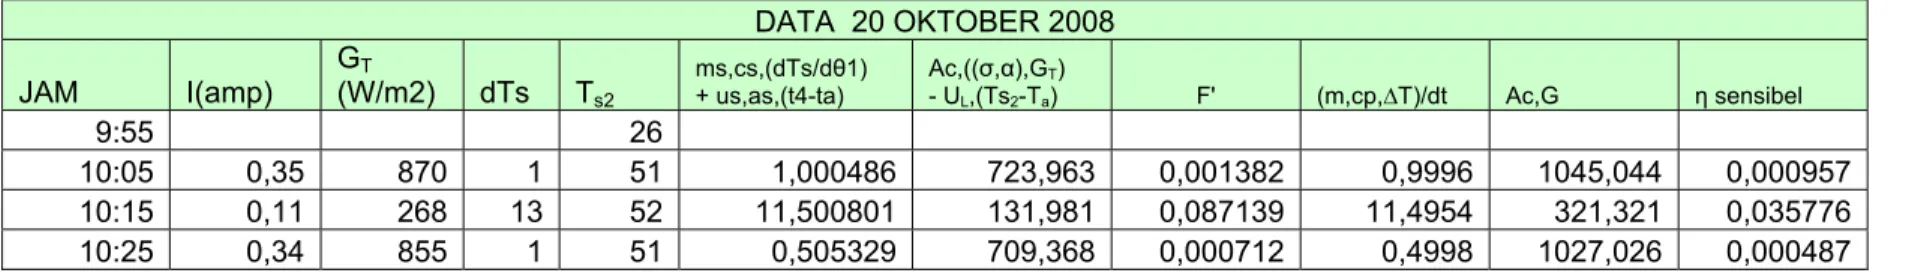 Tabel 4.11. Data kolektor 20 Oktober 2008. 